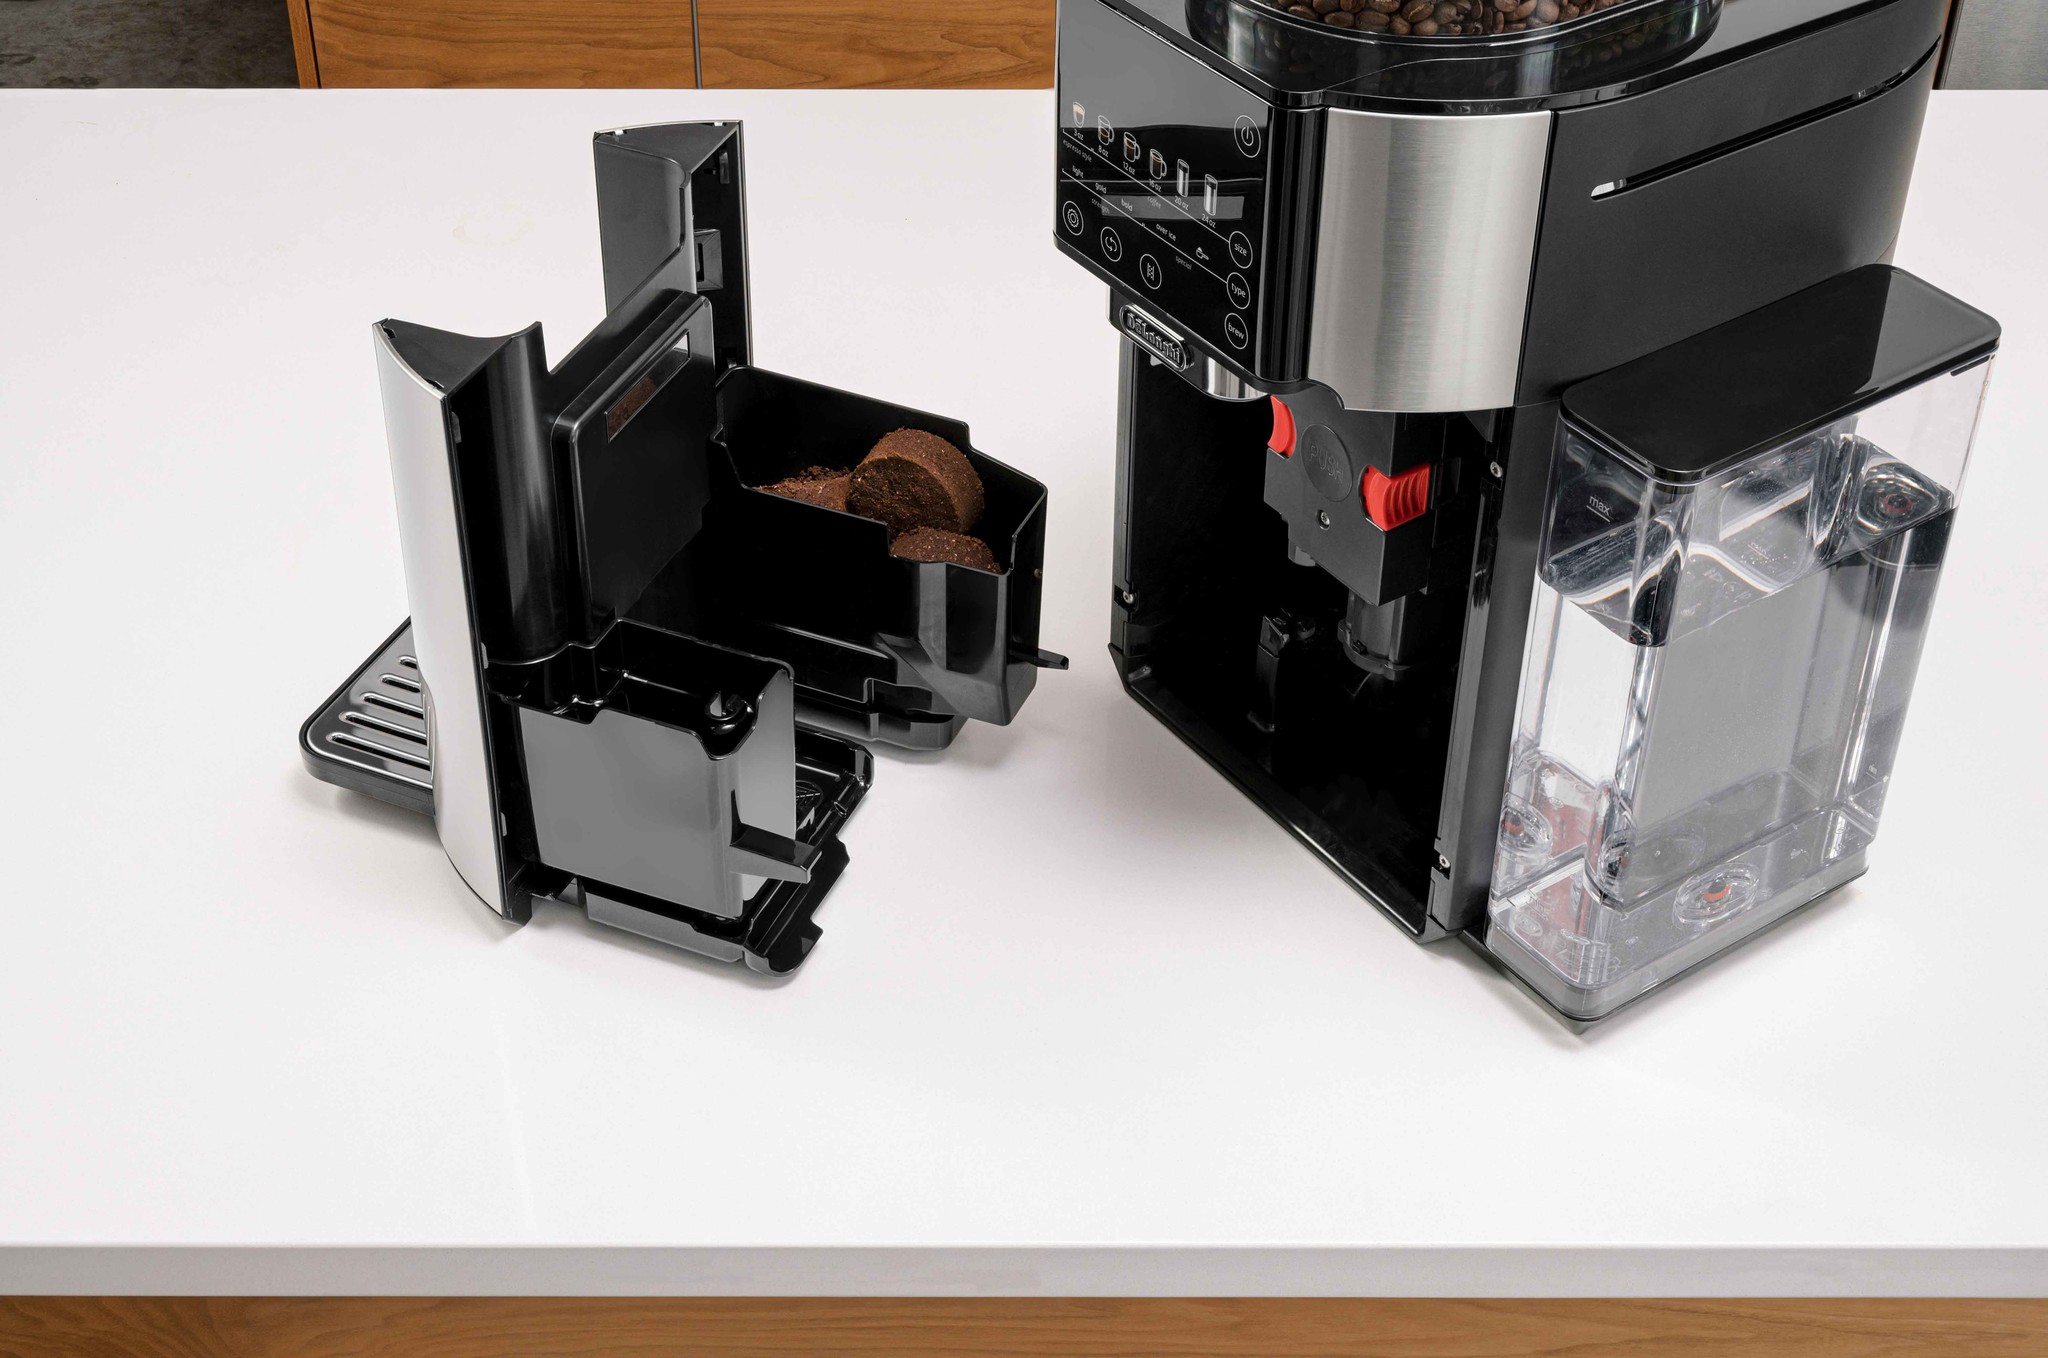 De'Longhi TrueBrew Drip Coffee Maker, Tekkaus®